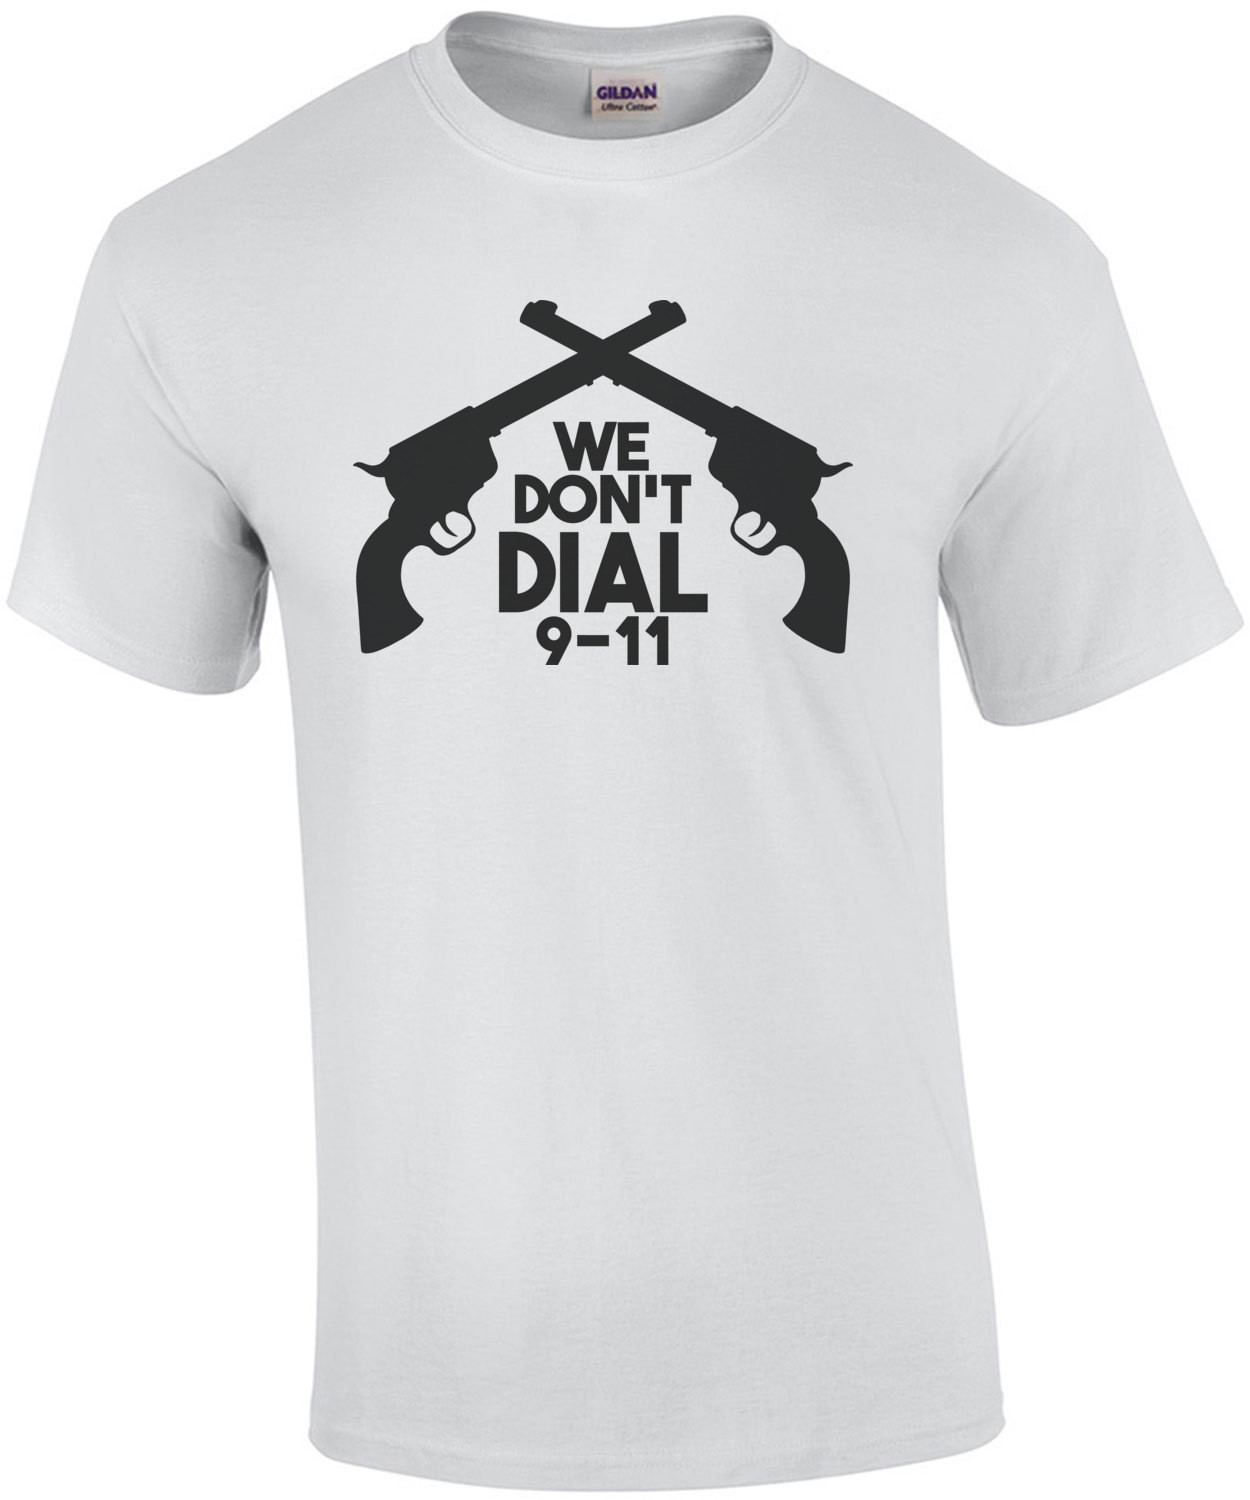 We don't dial 911 - Pro Gun T-Shirt